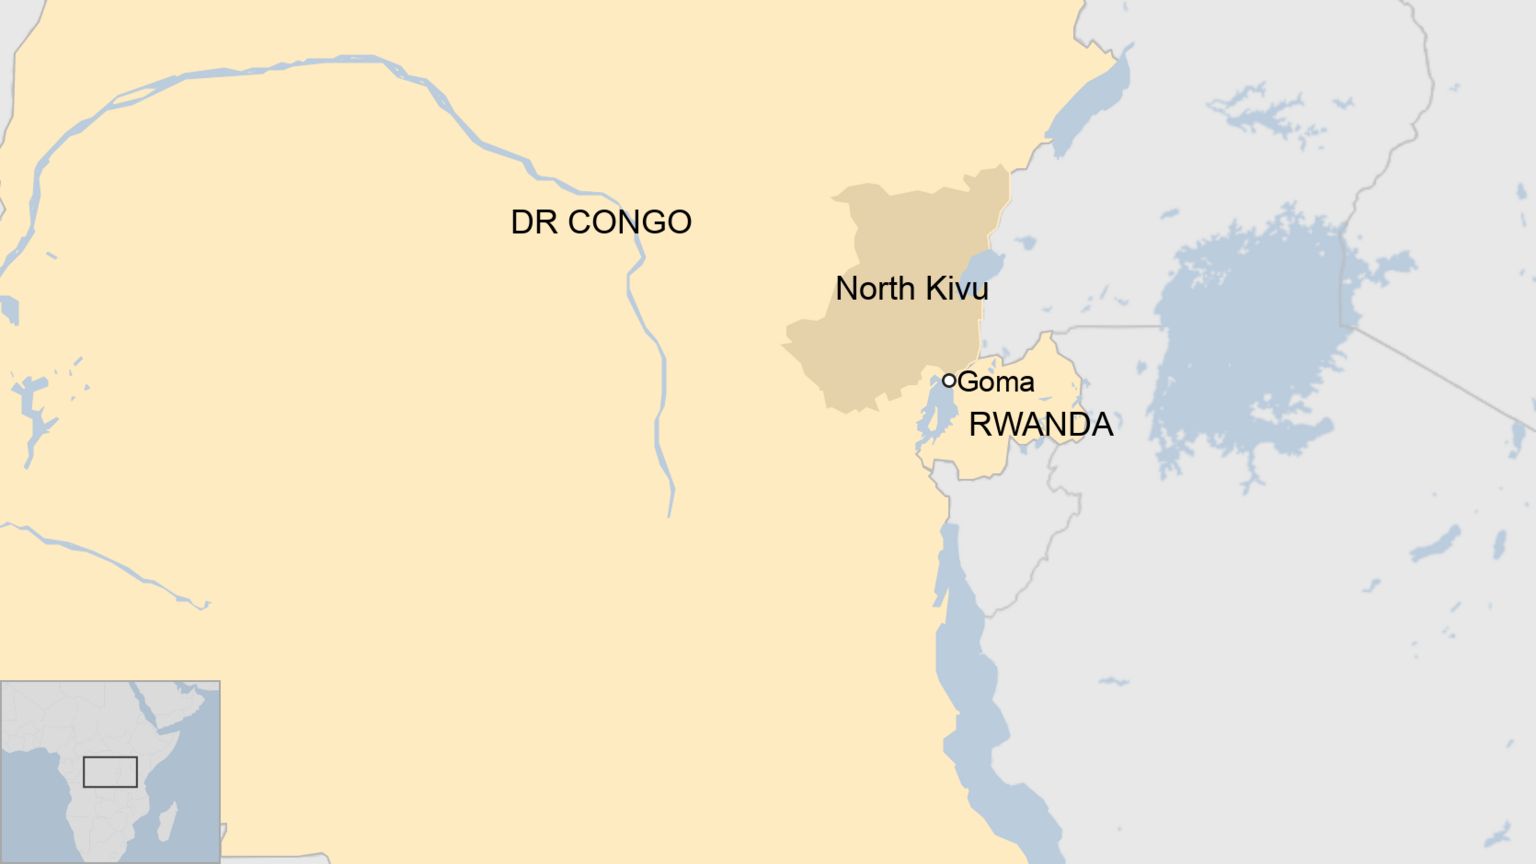 map of DR Congo and Rwanda